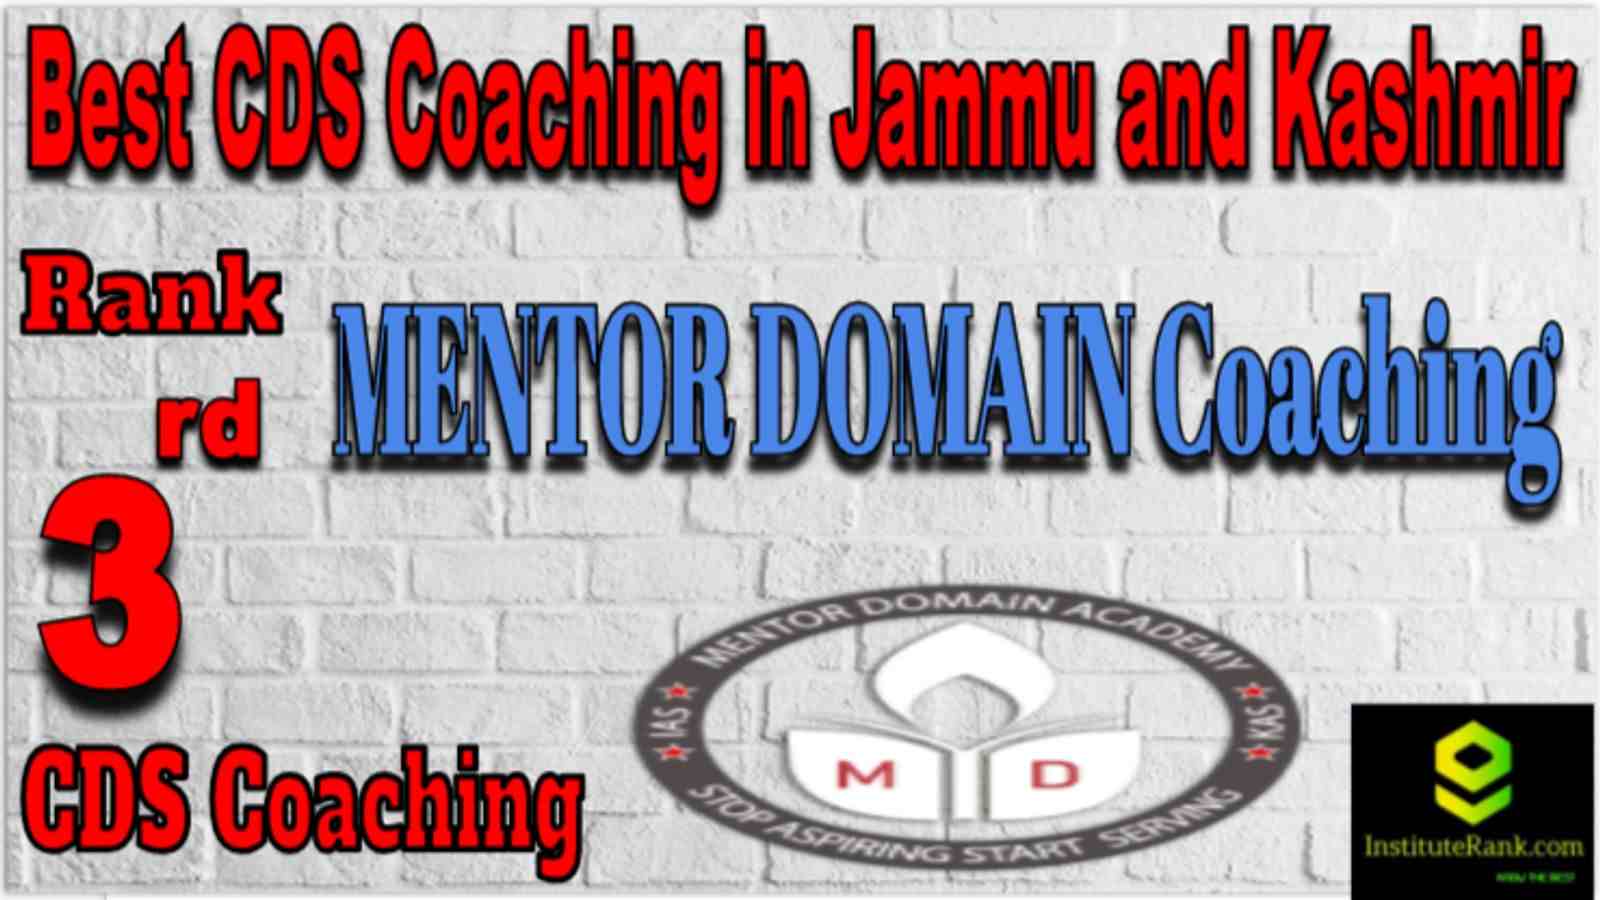 Rank 3 Best CDS Coaching in Jammu and Kashmir